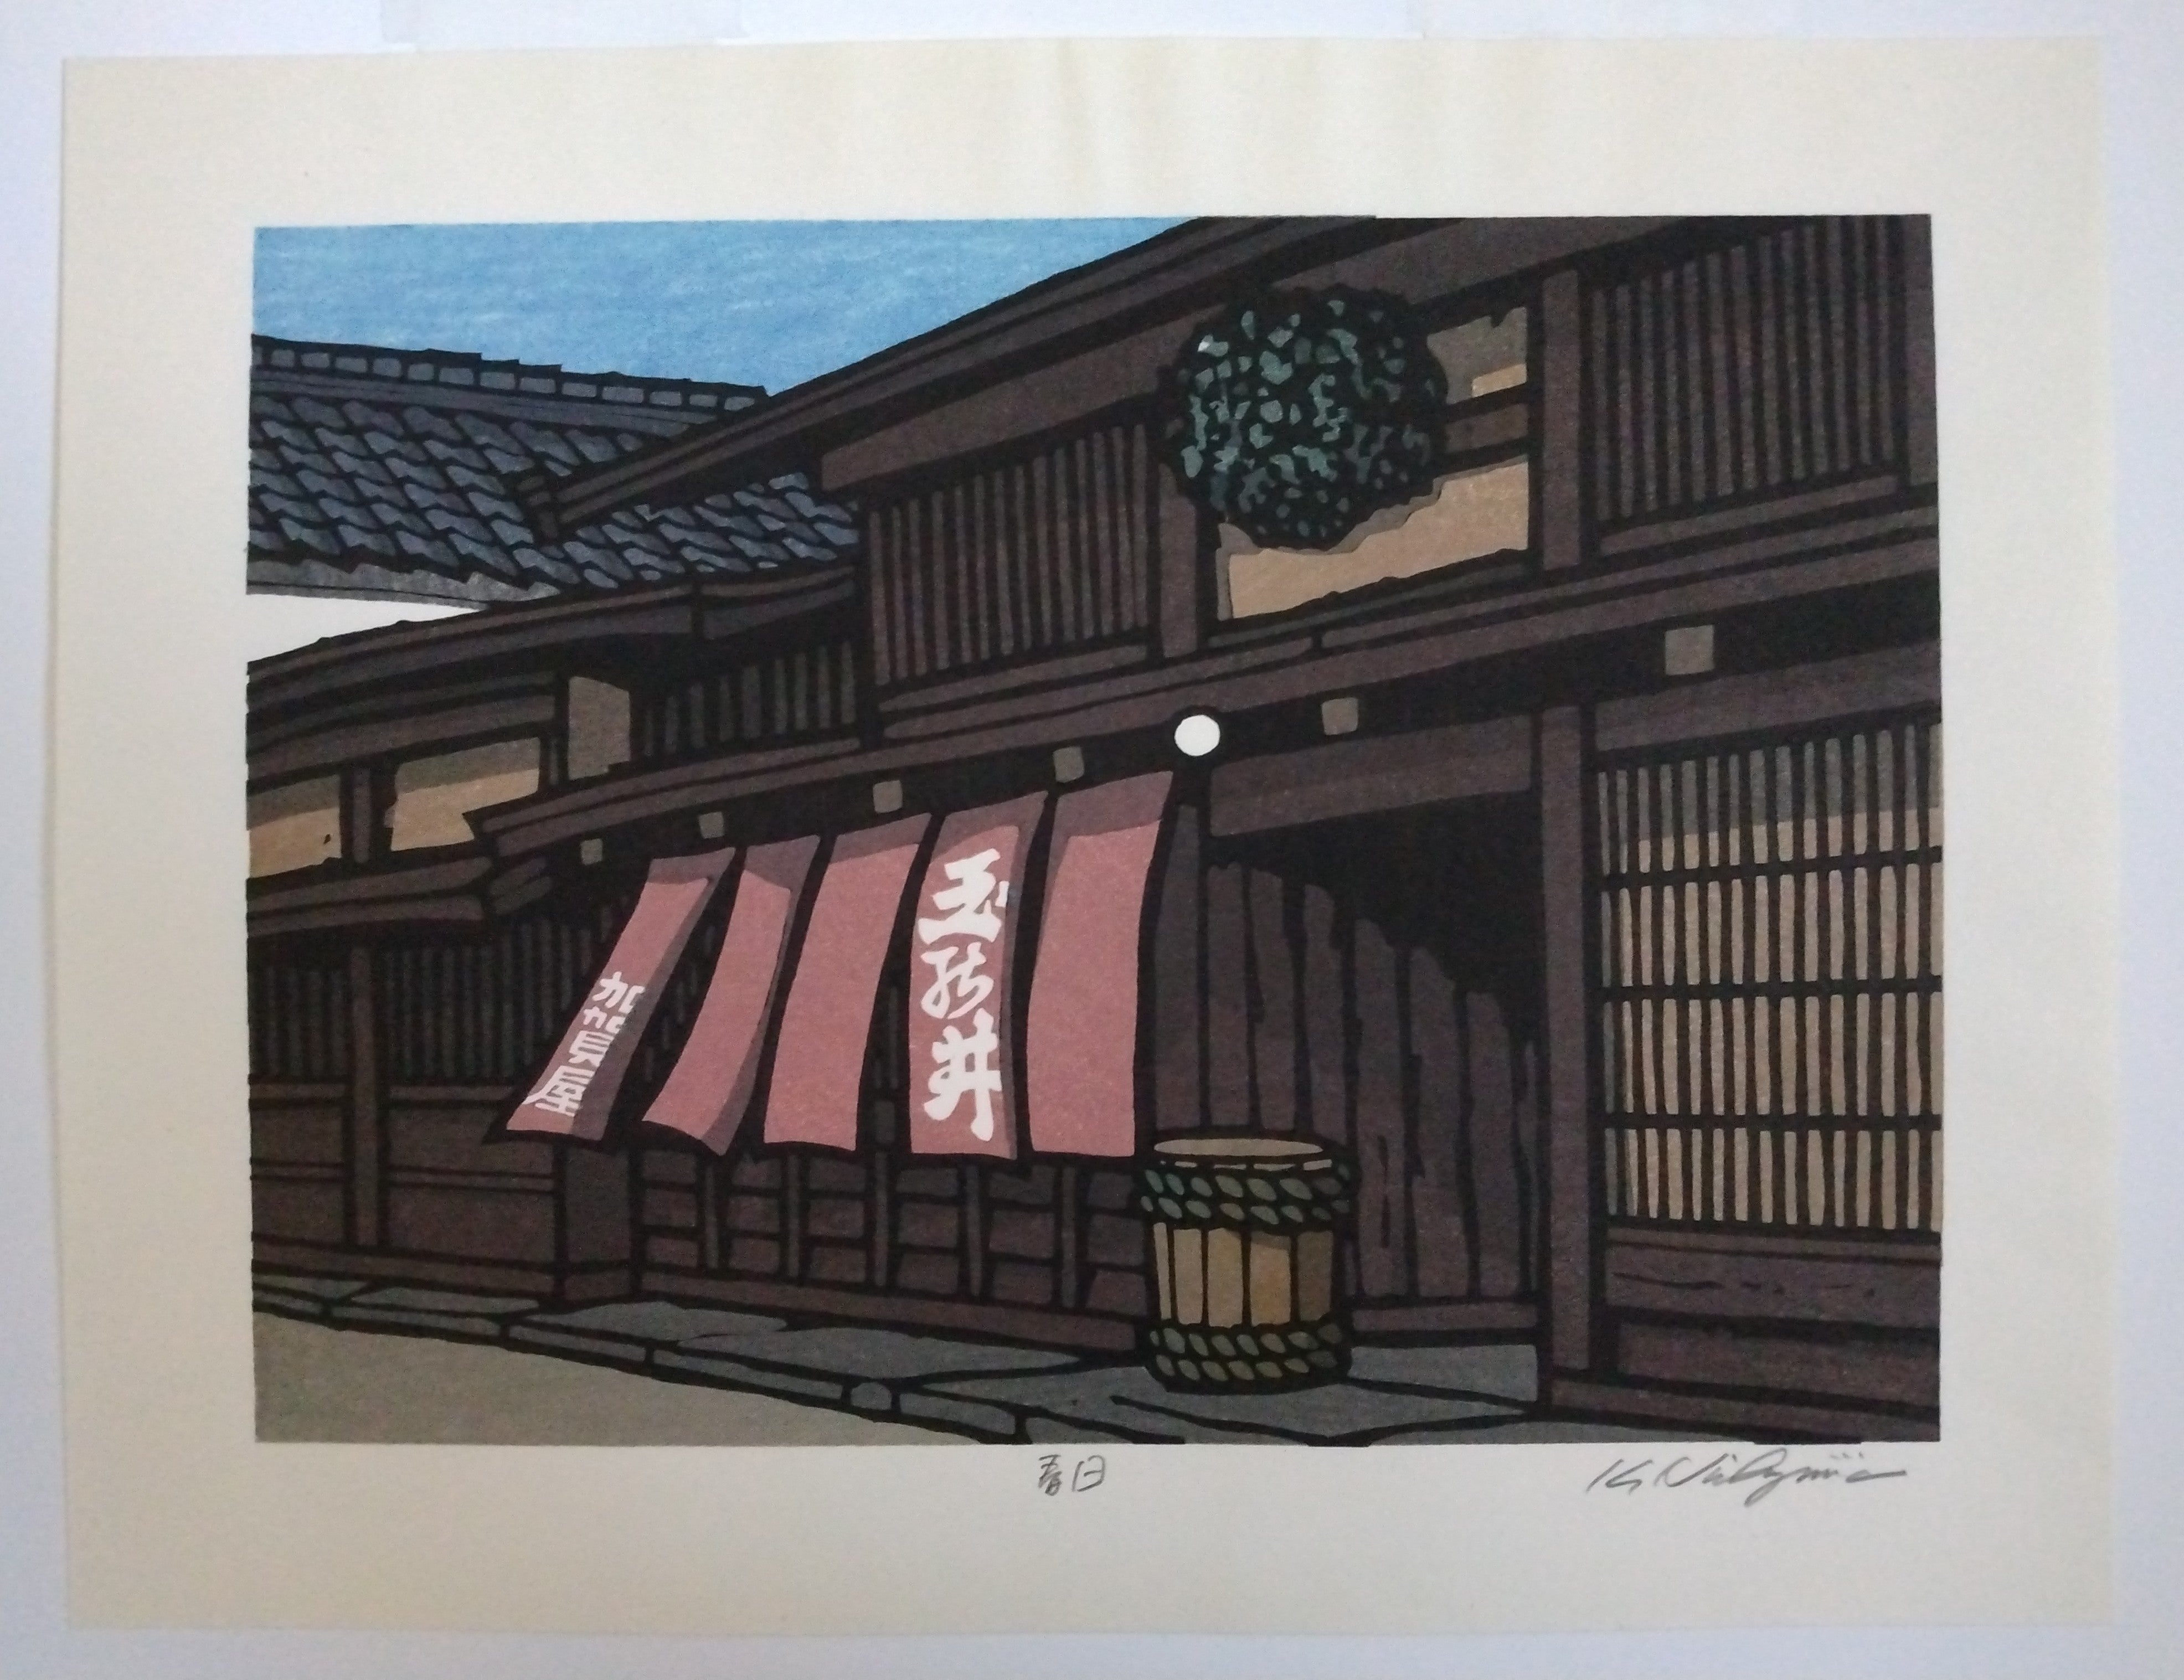 Woodblock Print by Katsuyuki Nishijima, "Spring Day" (Shun Jitsu)